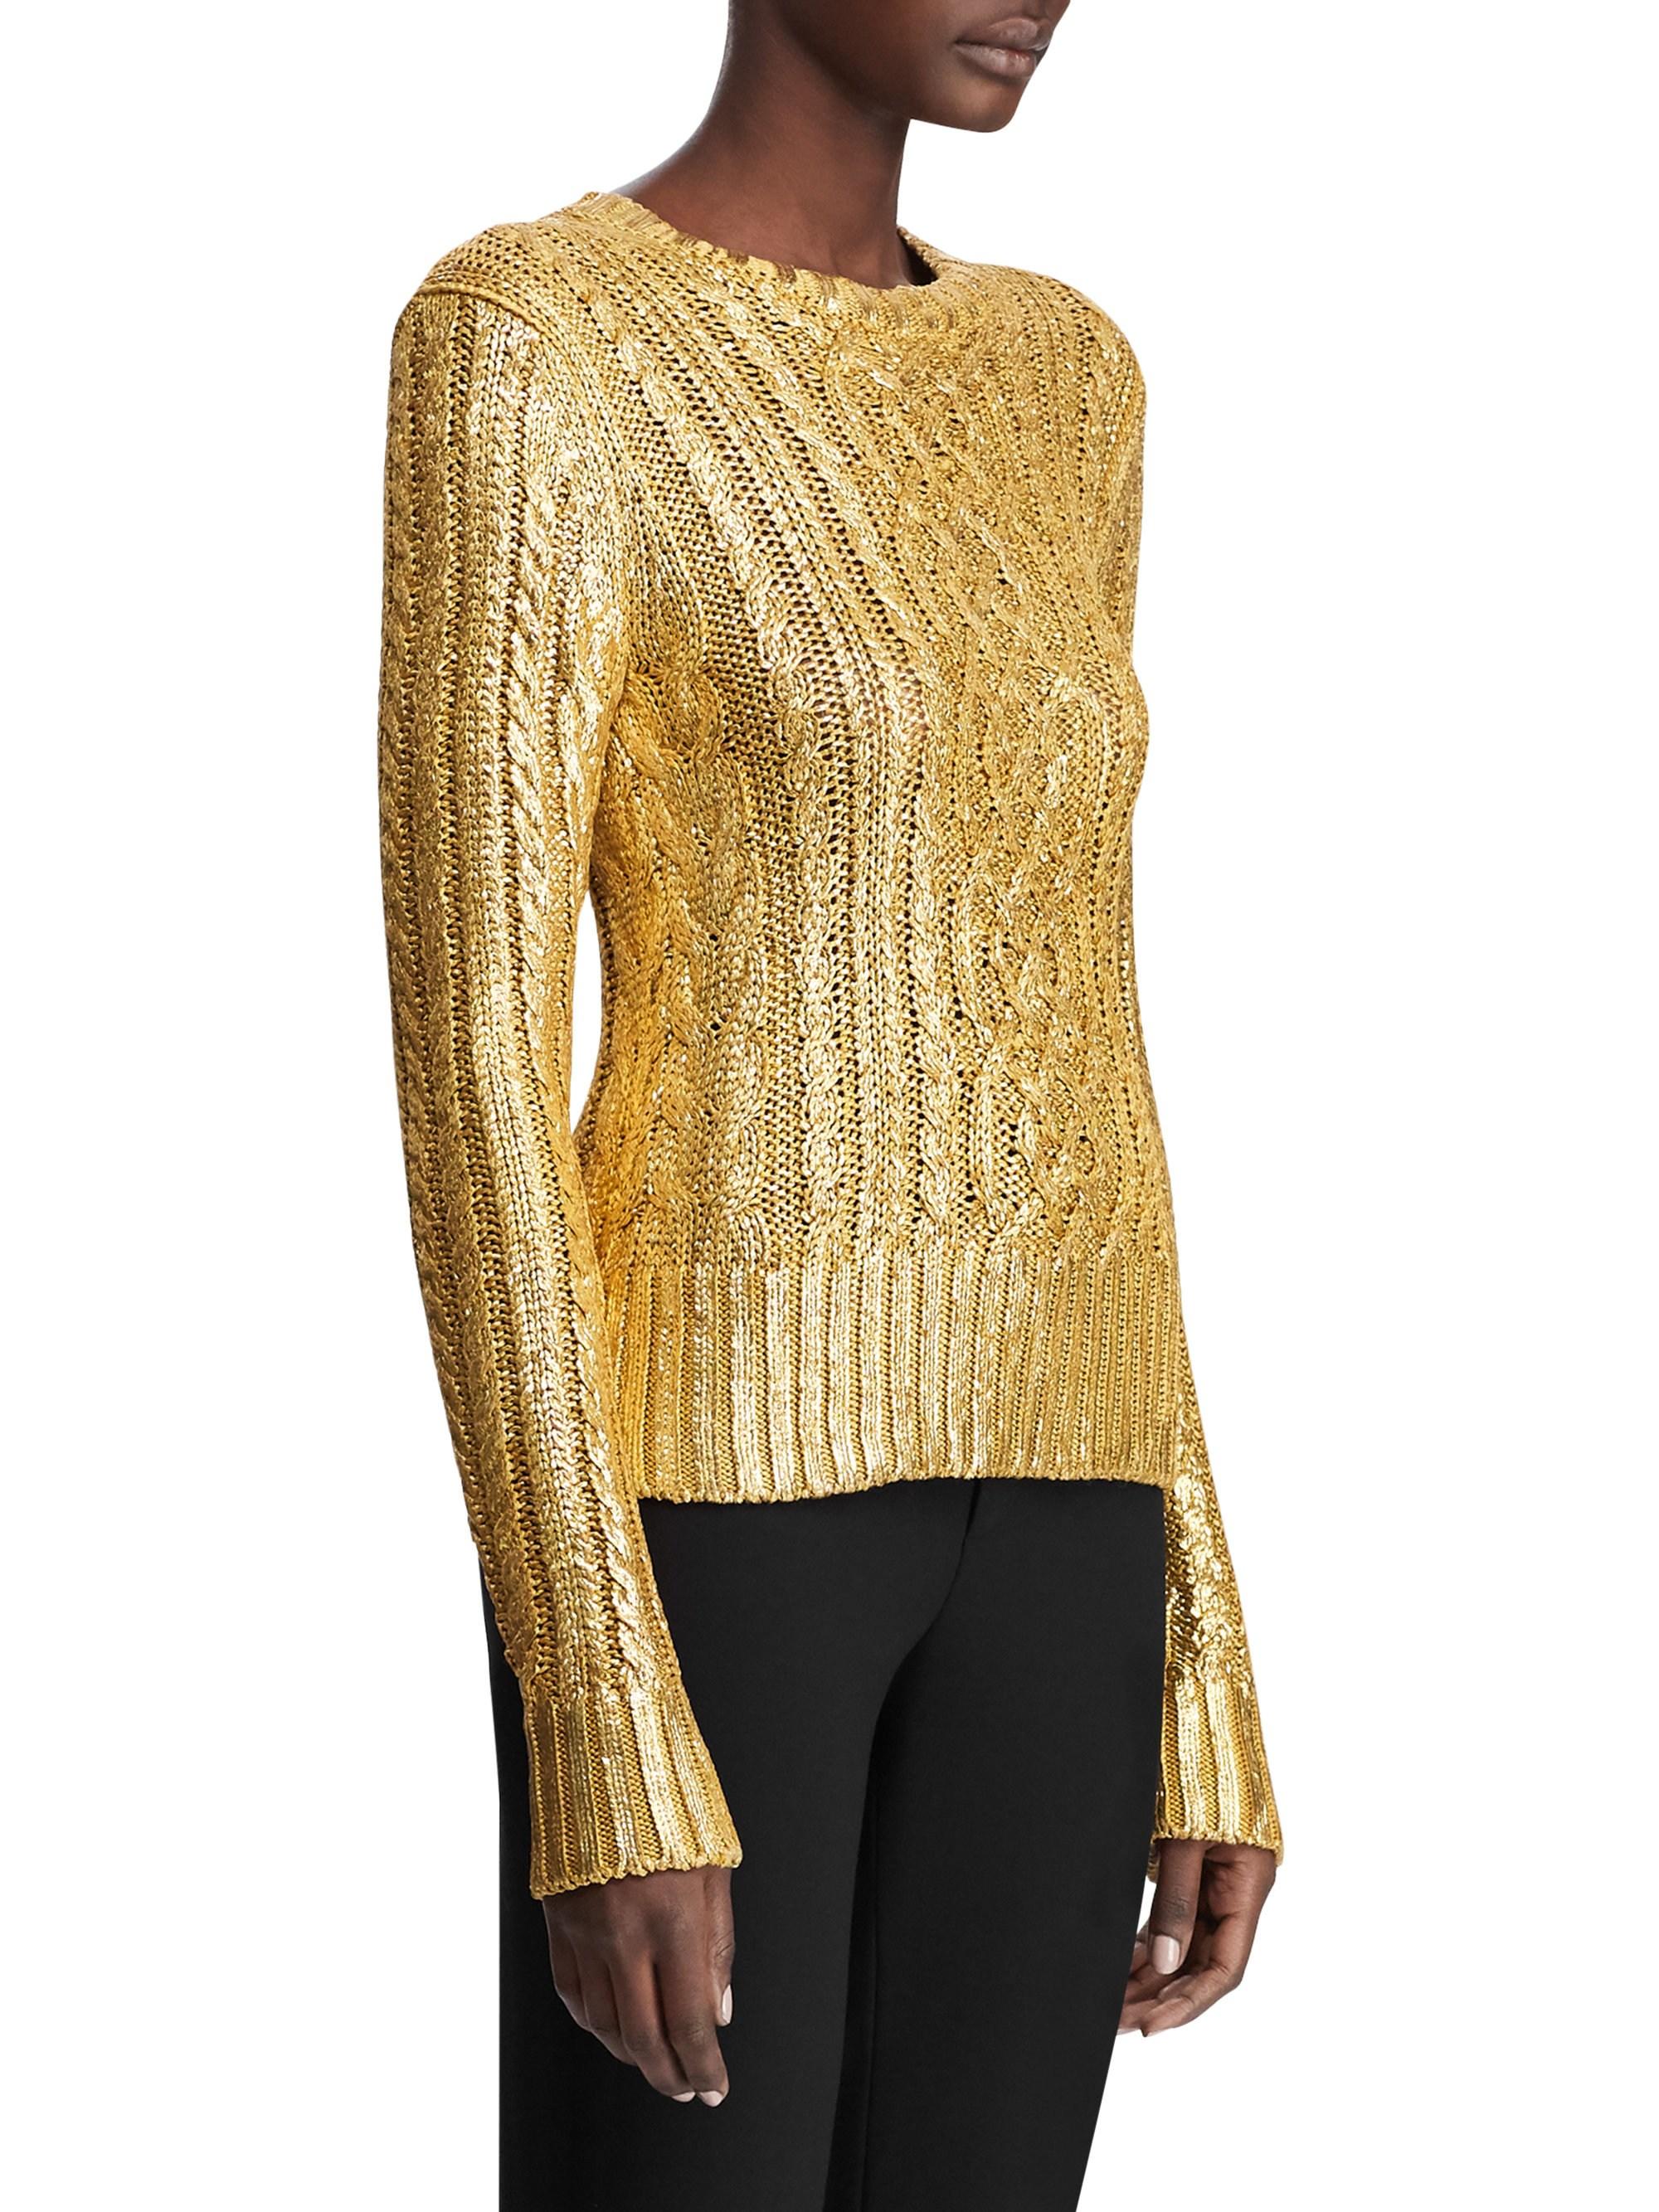 Ralph Lauren Gold Sweater - 2 For Sale on 1stDibs